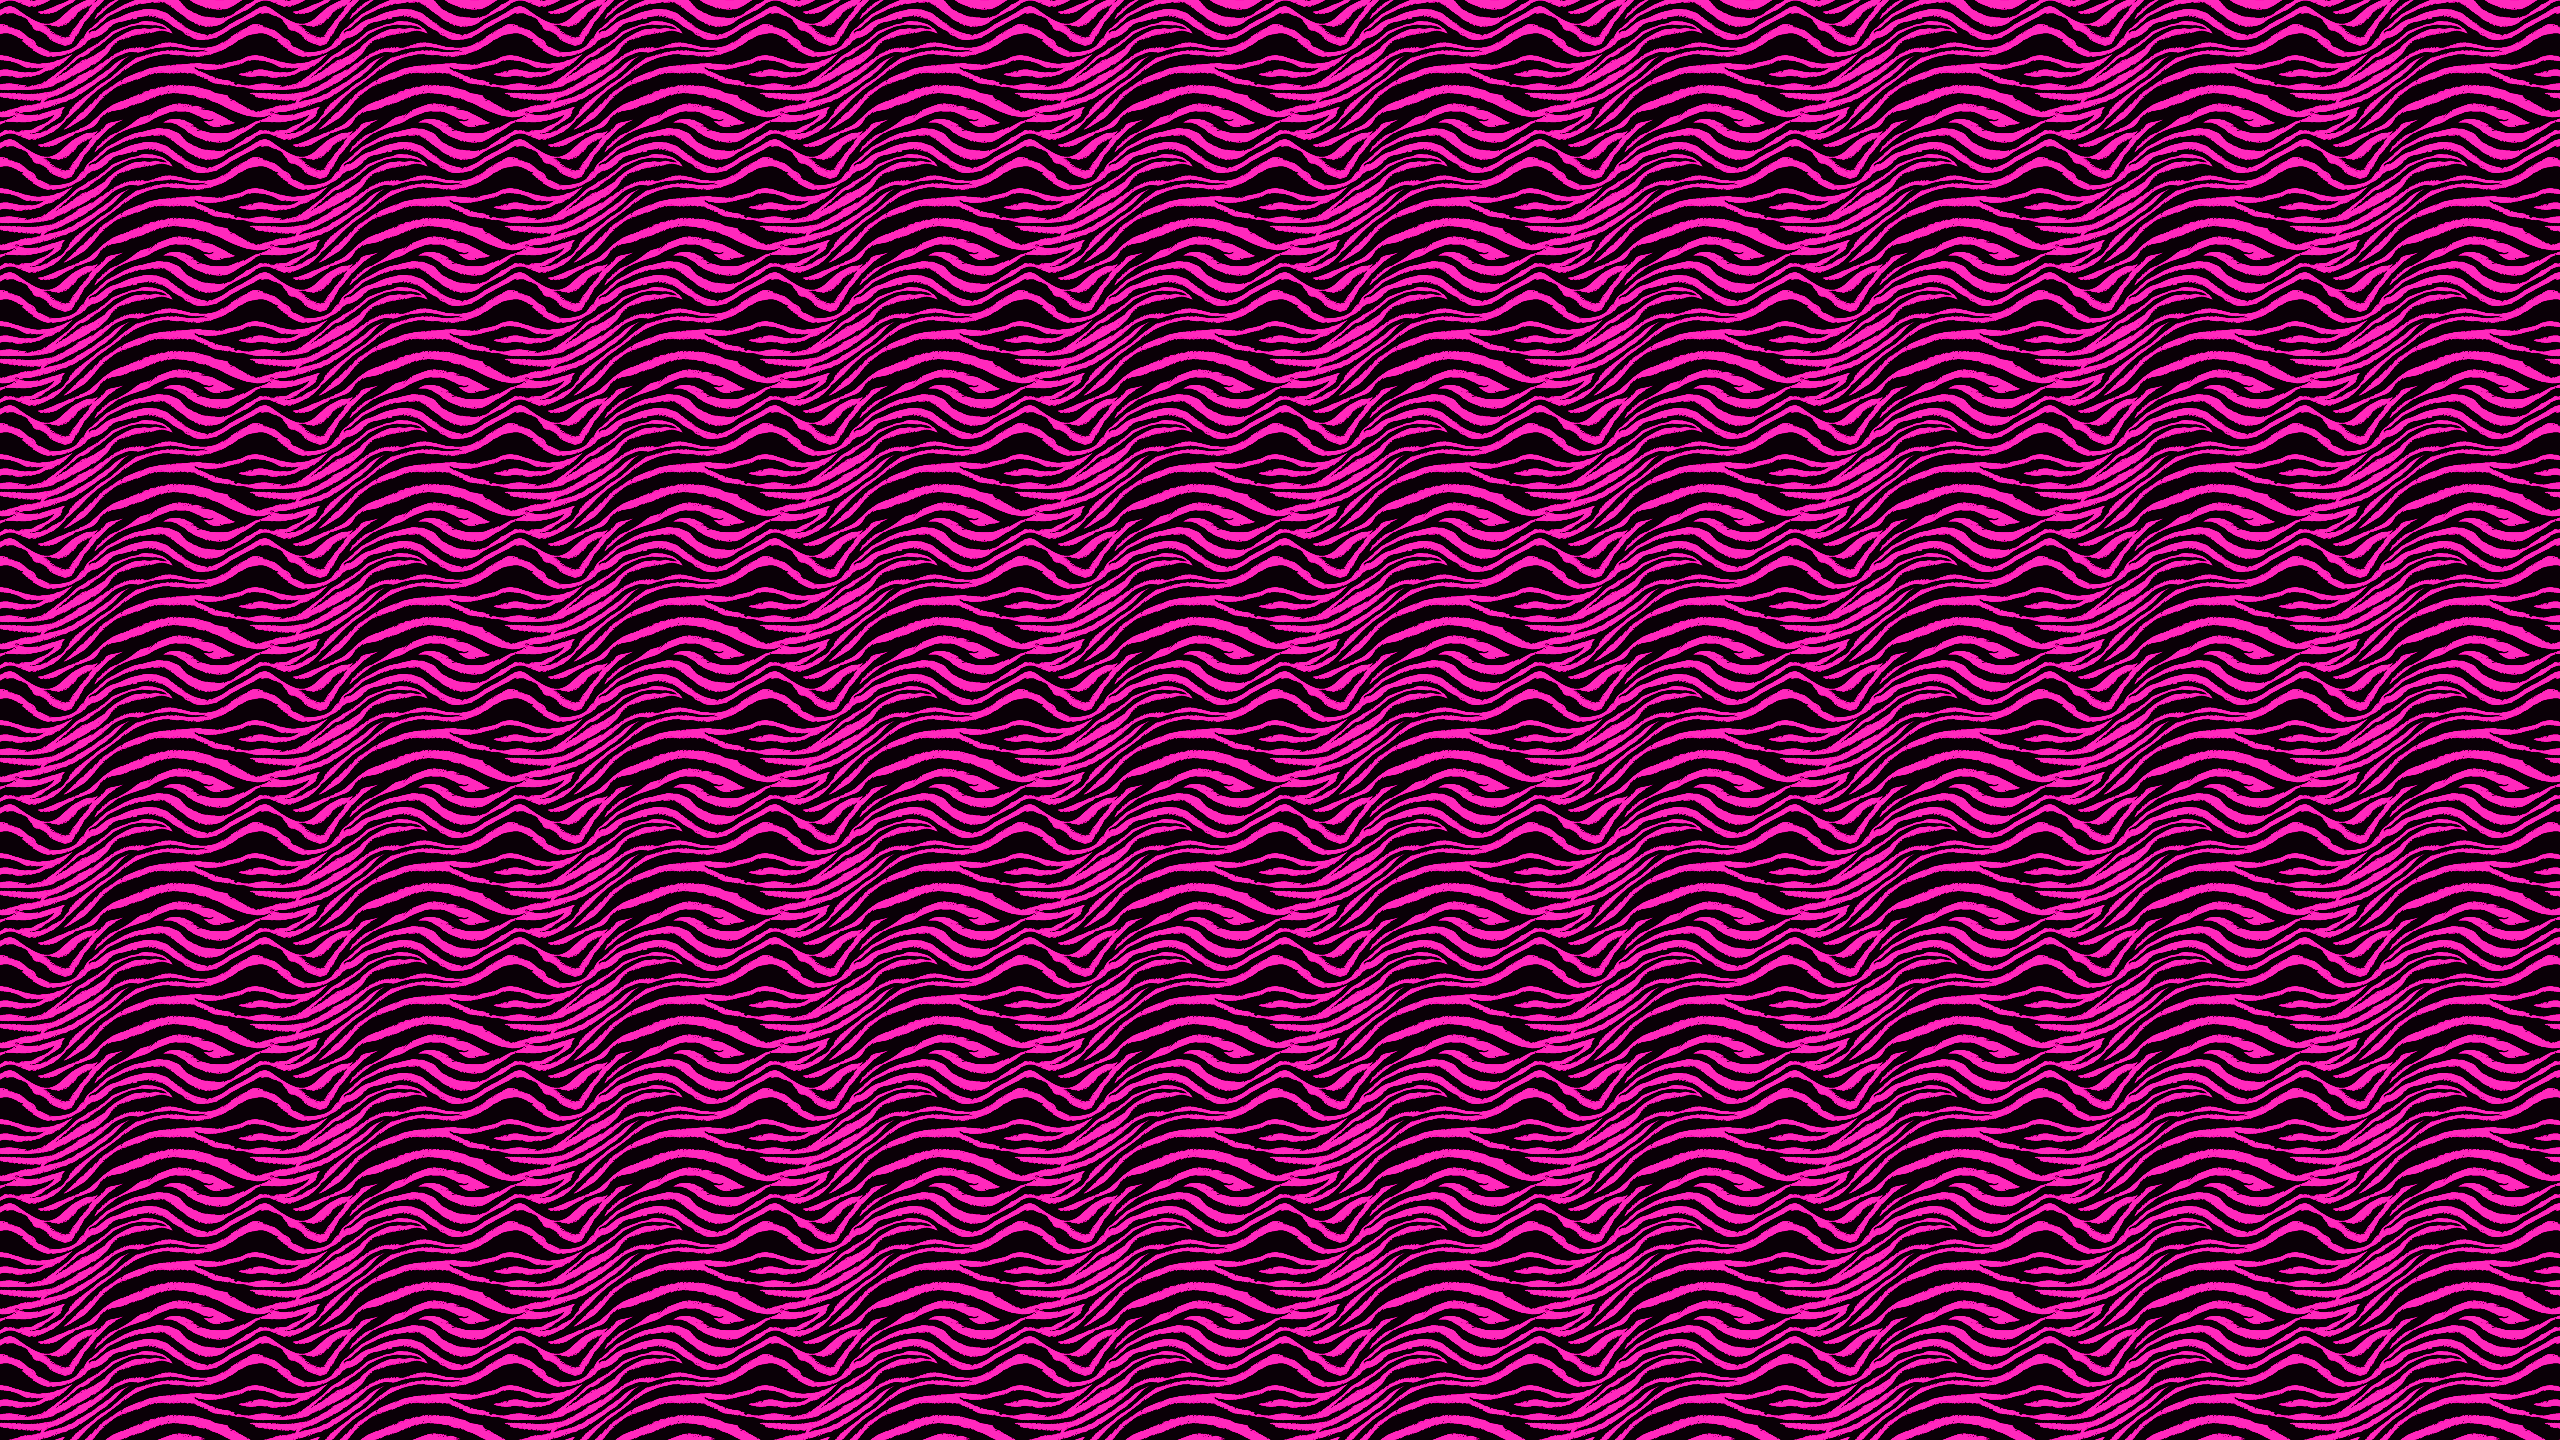 This Pink Zebra Fur Desktop Wallpaper Is Easy Just Save The